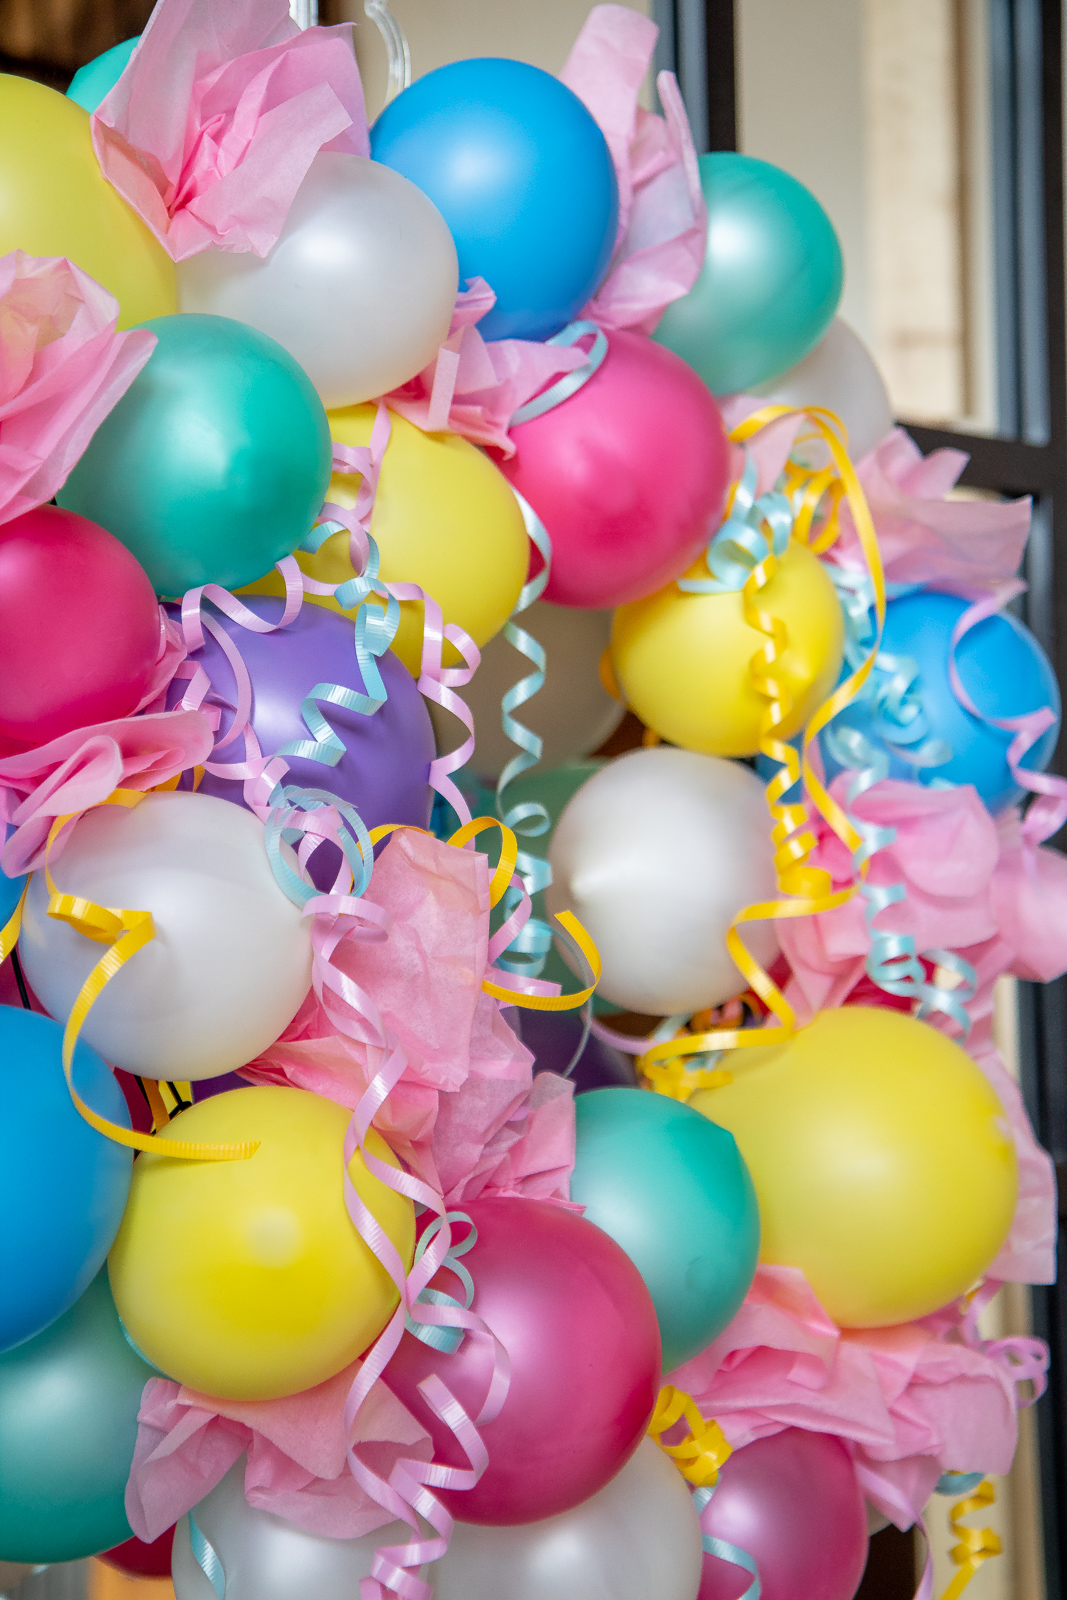 How to make a birthday balloon wreath